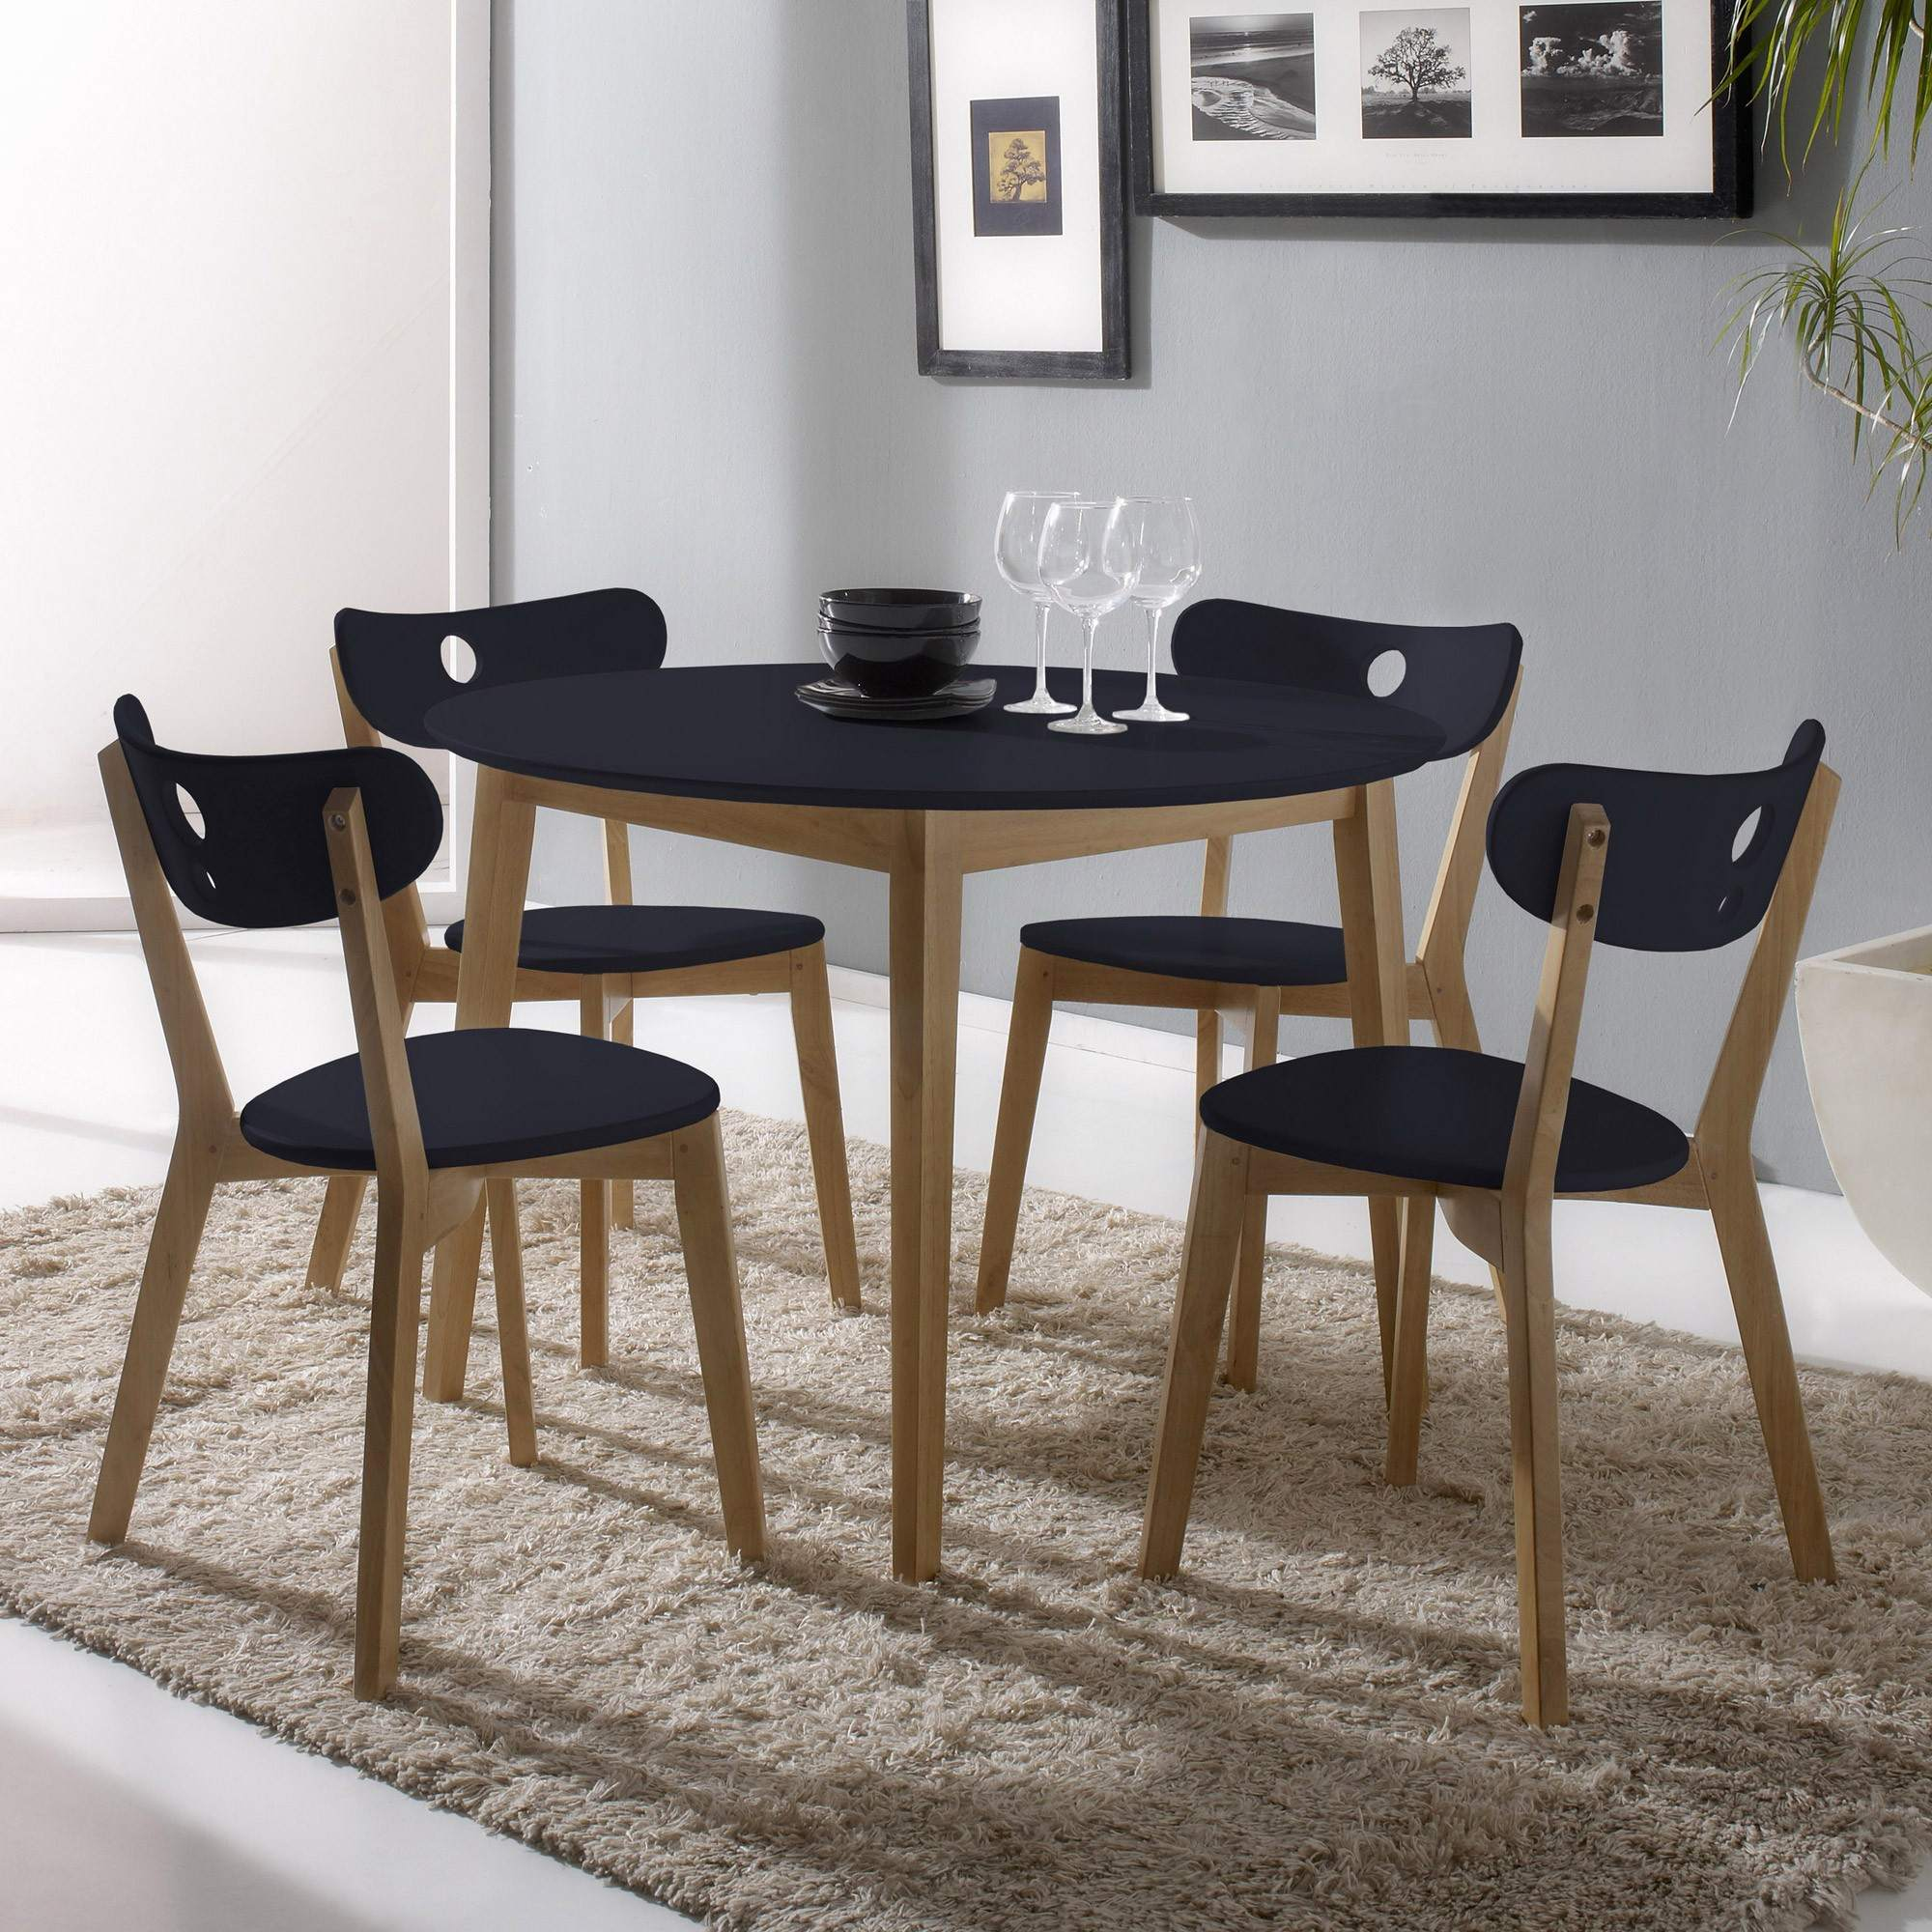 Table et chaise scandinave conforama